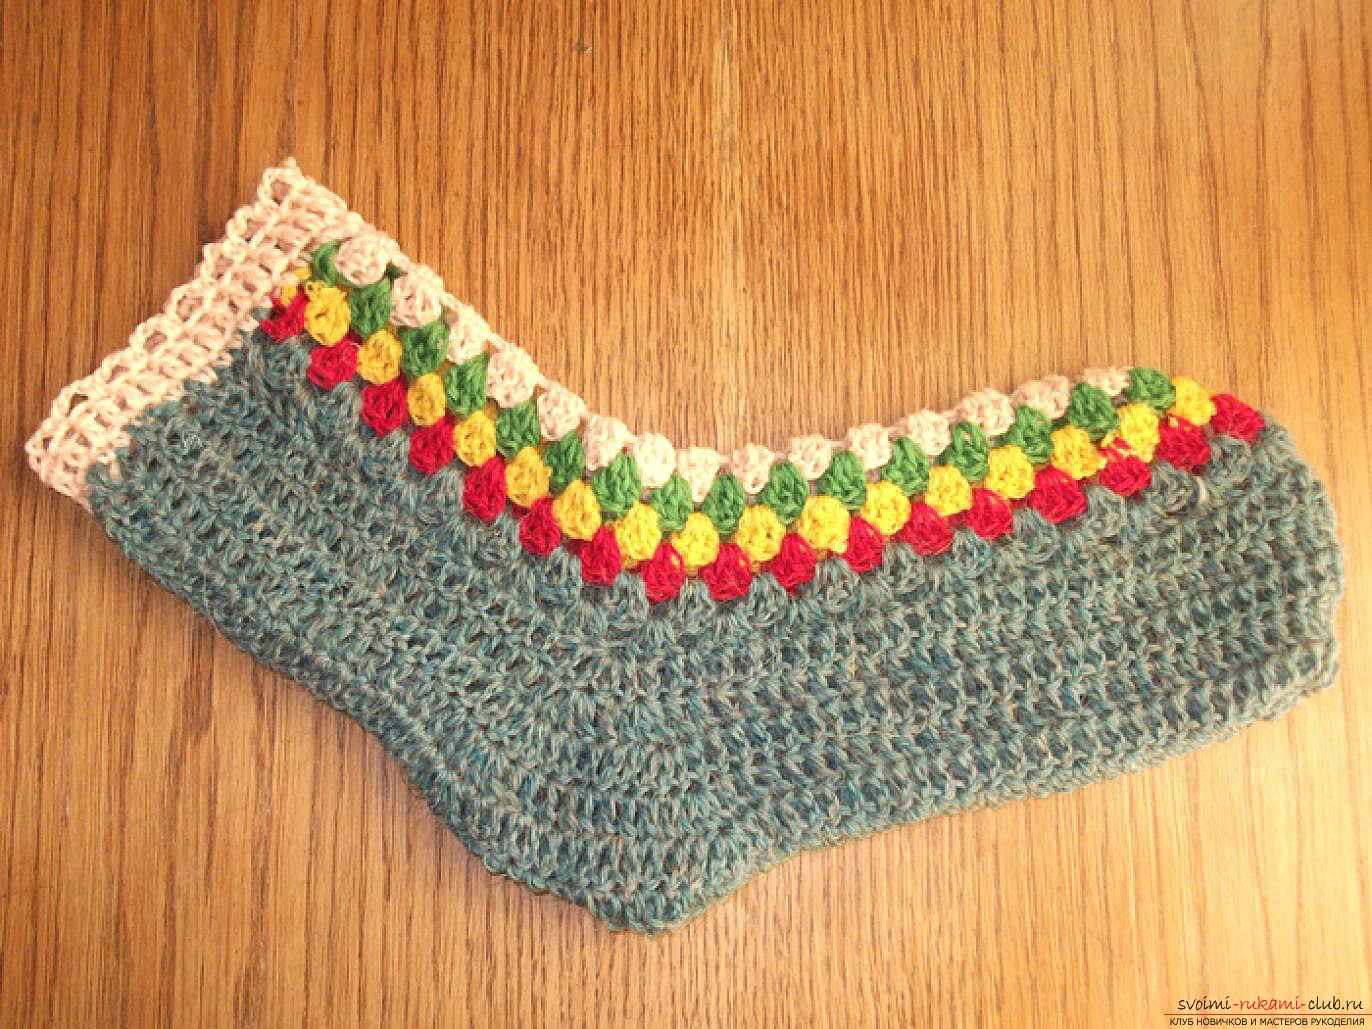 crocheted beautiful home-made socks. Photo # 2